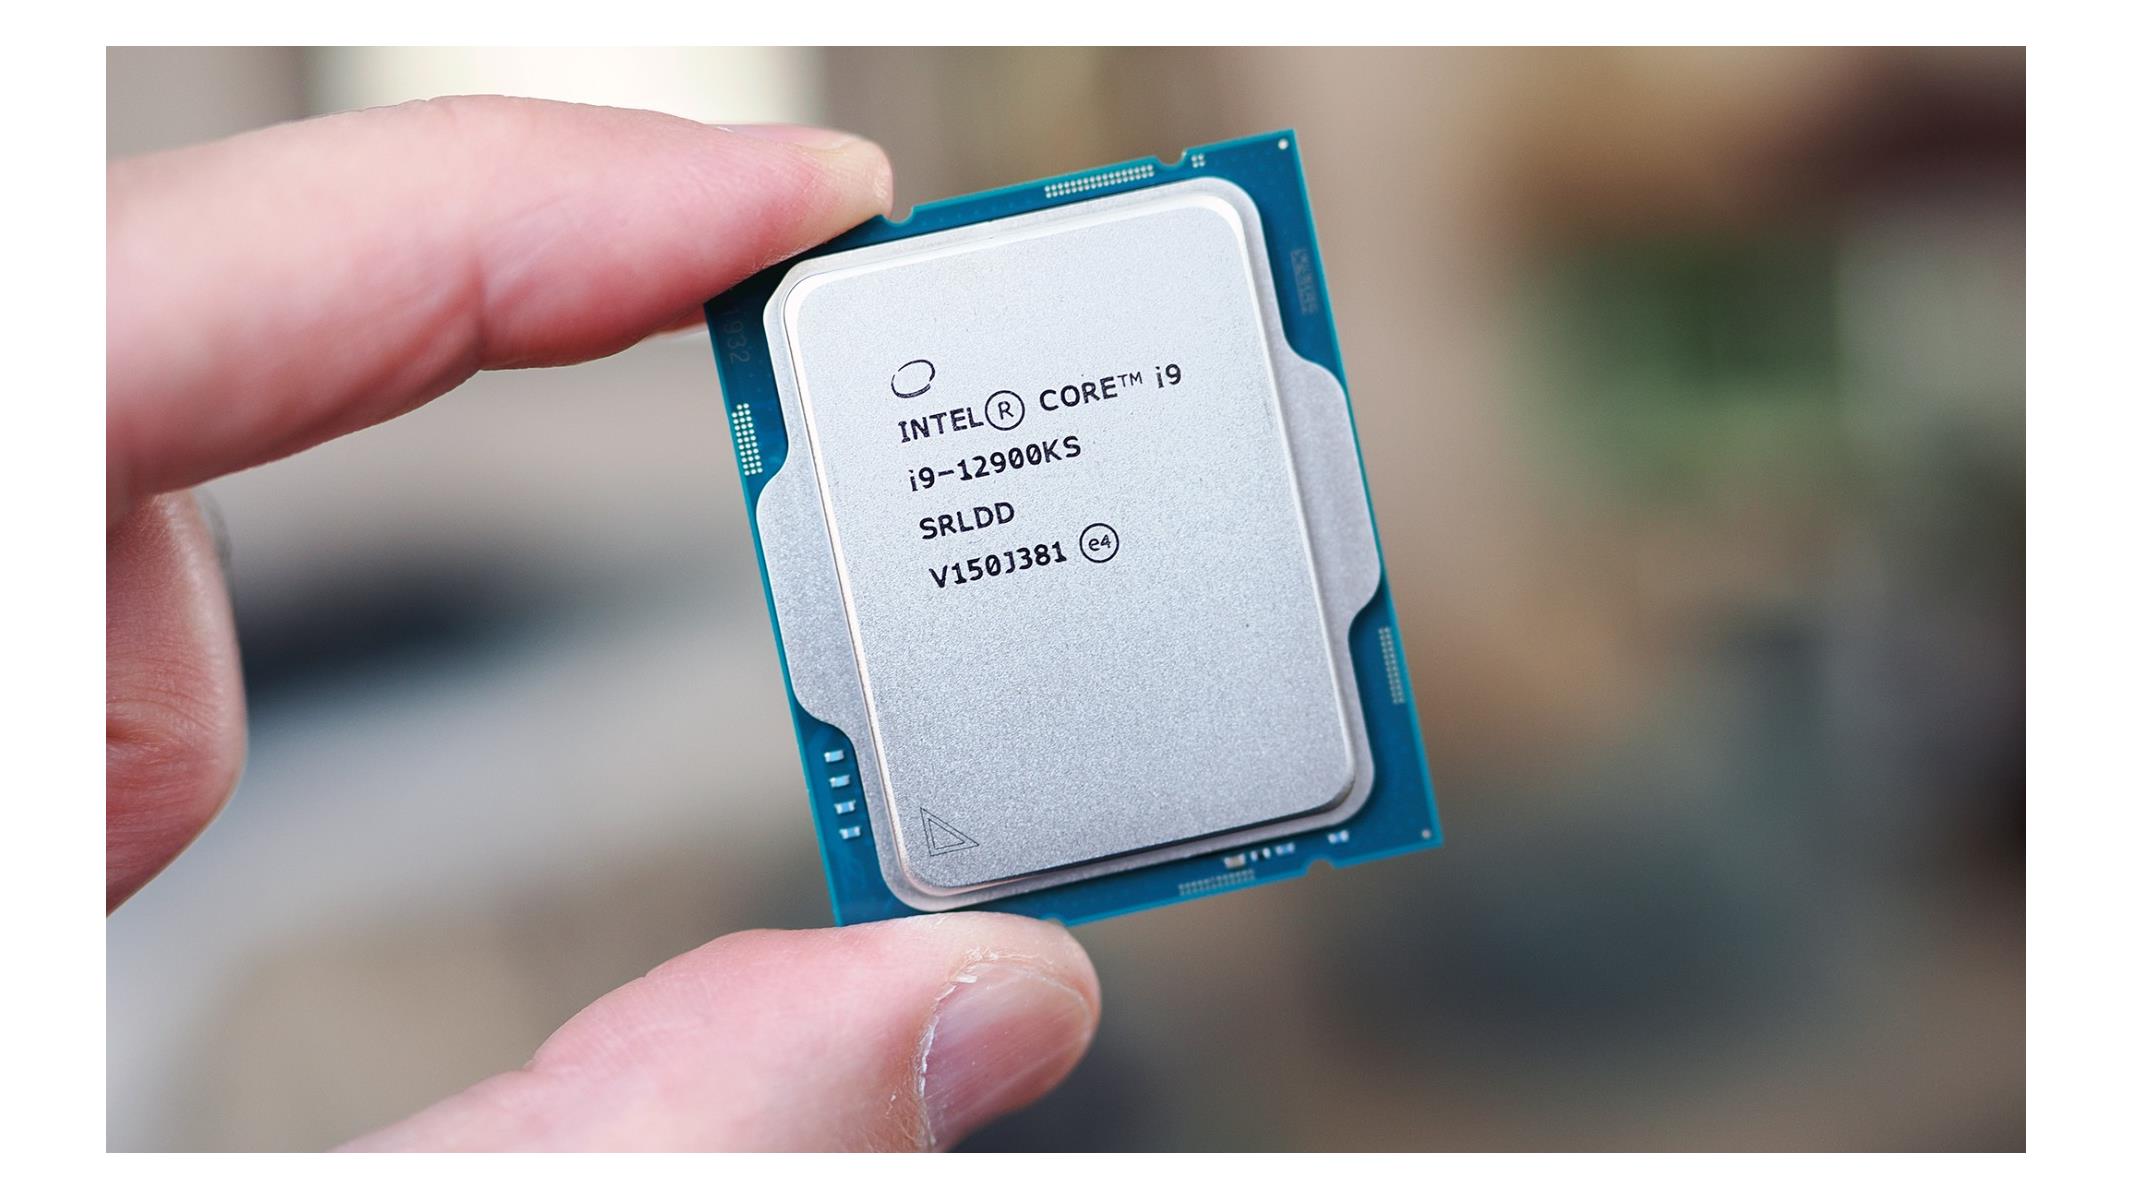 Intel Core i9-12900K 3.2GHz Processor